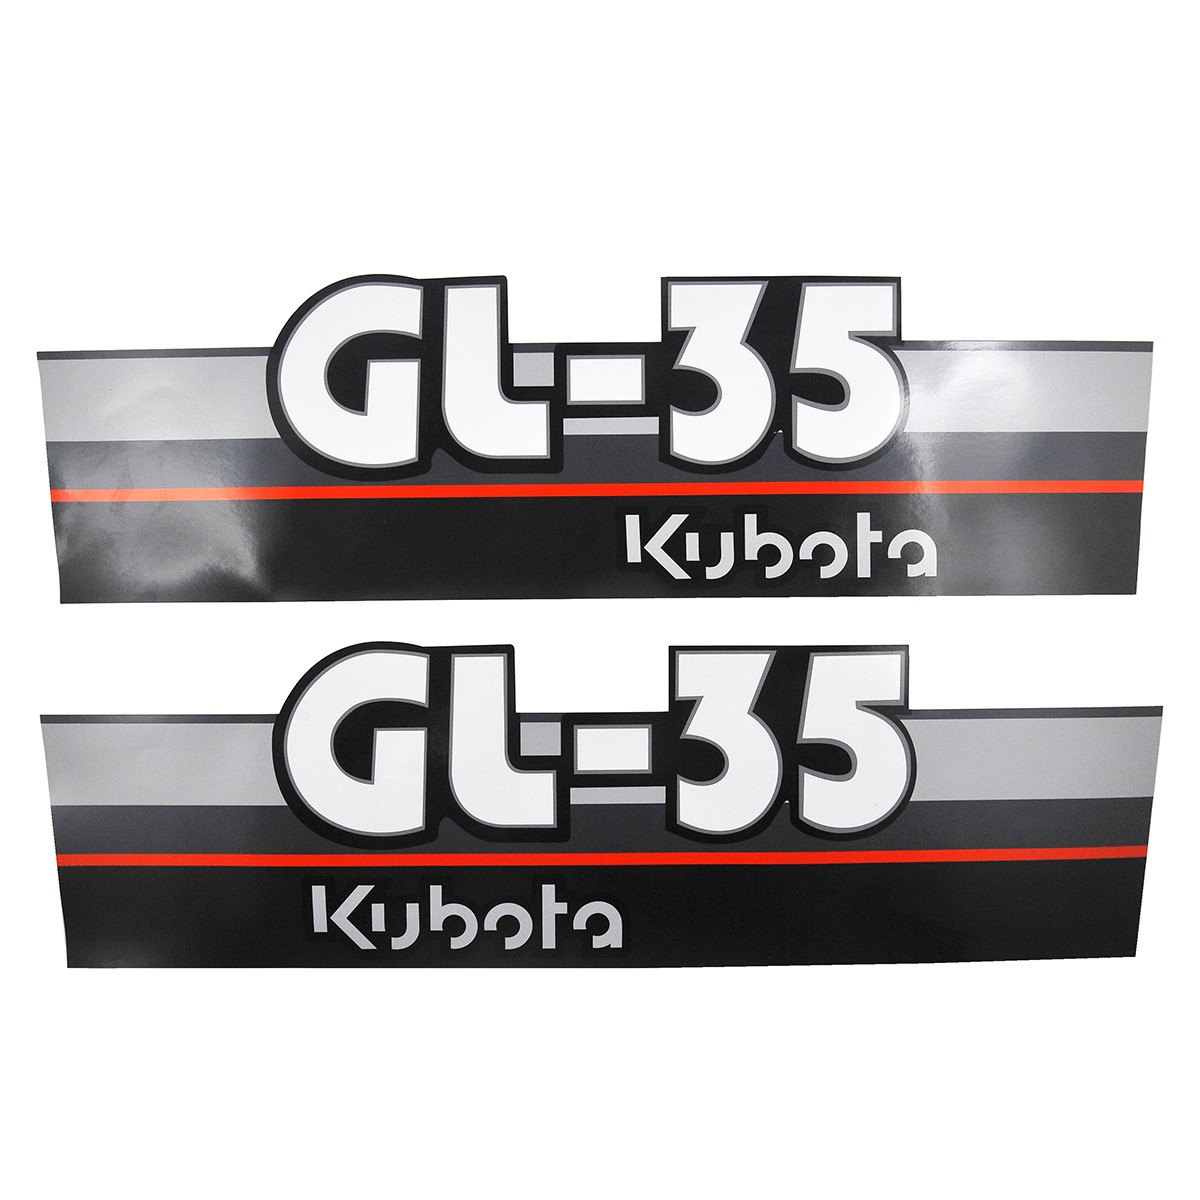 Kubota GL35 stickers